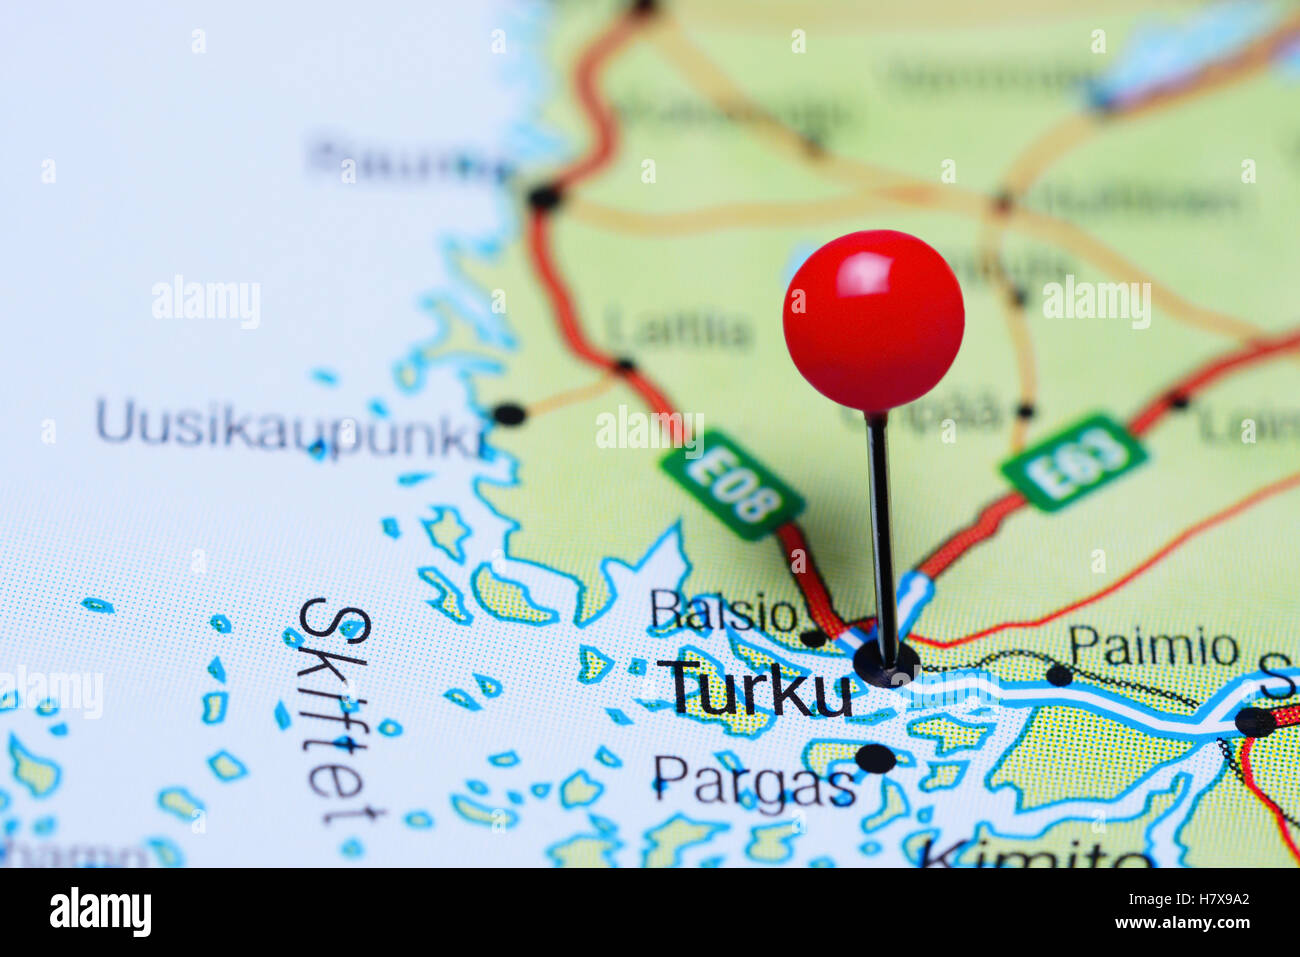 Turku pinned on a map of Finland Stock Photo